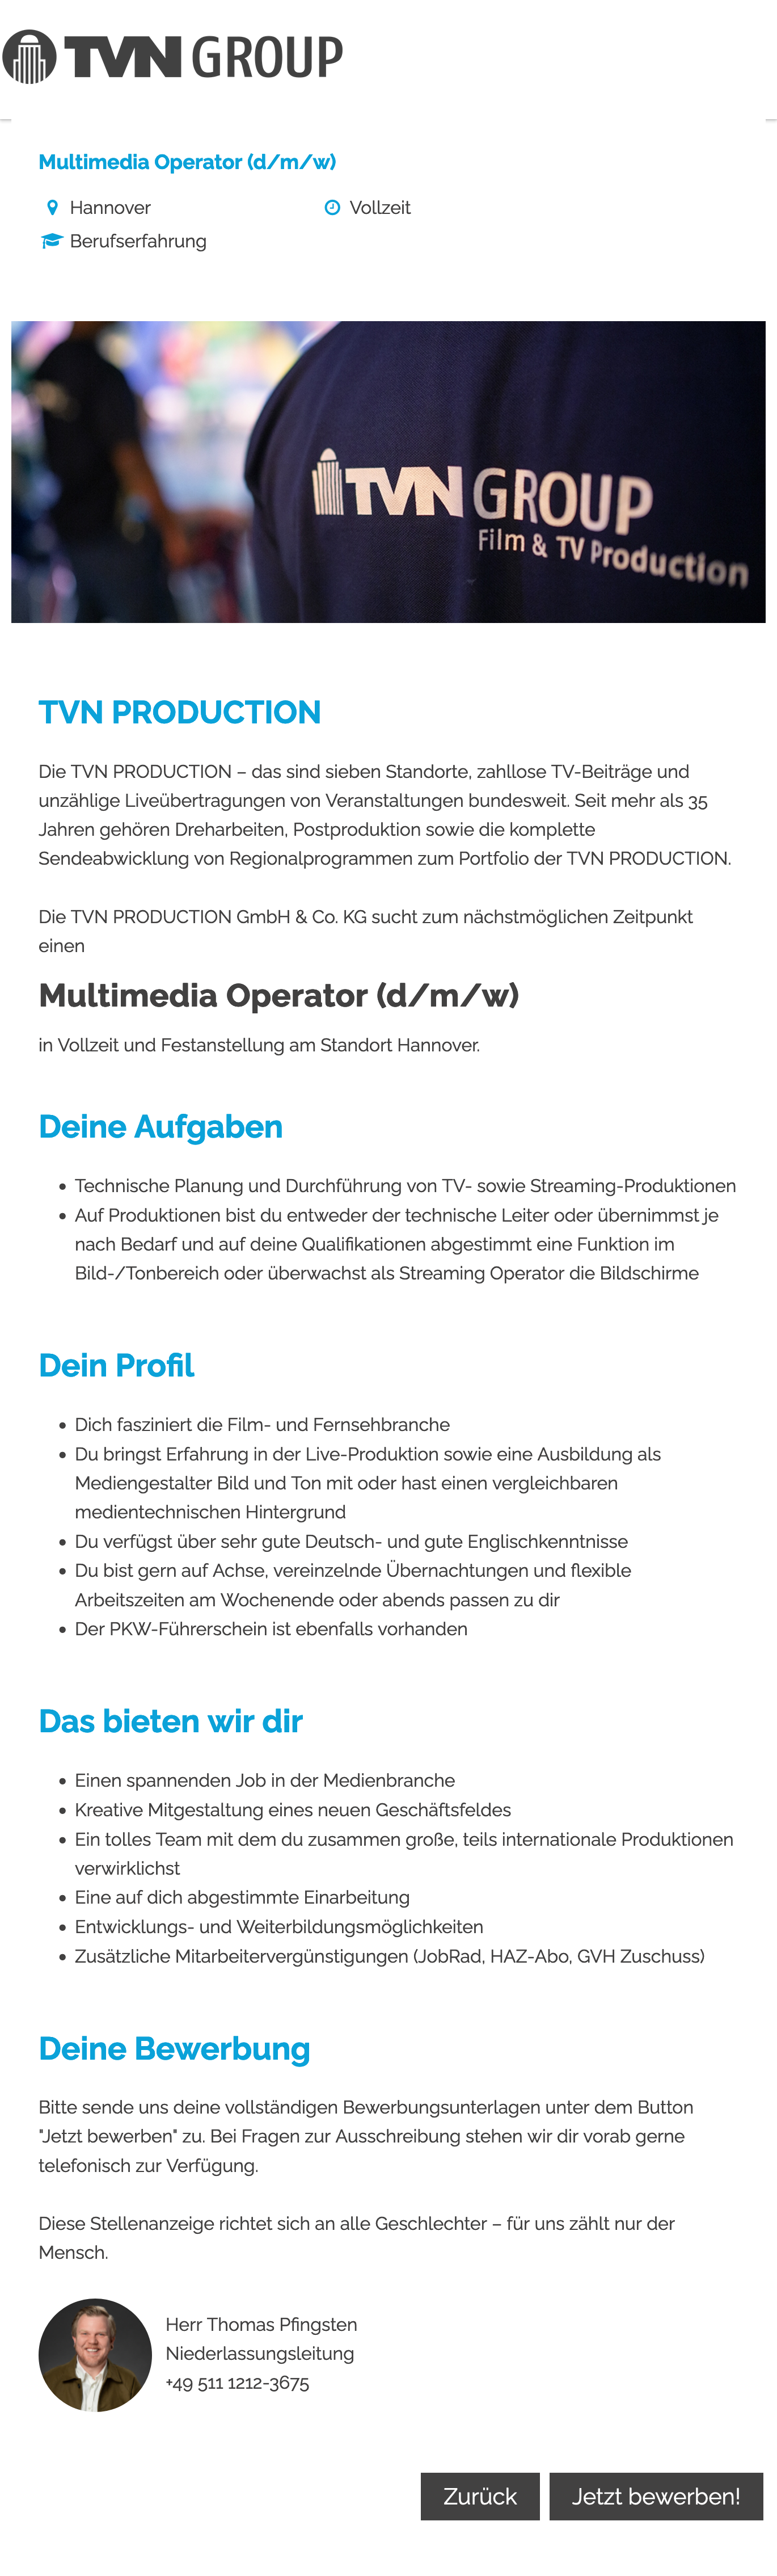 Multimedia Operator (d/m/w)